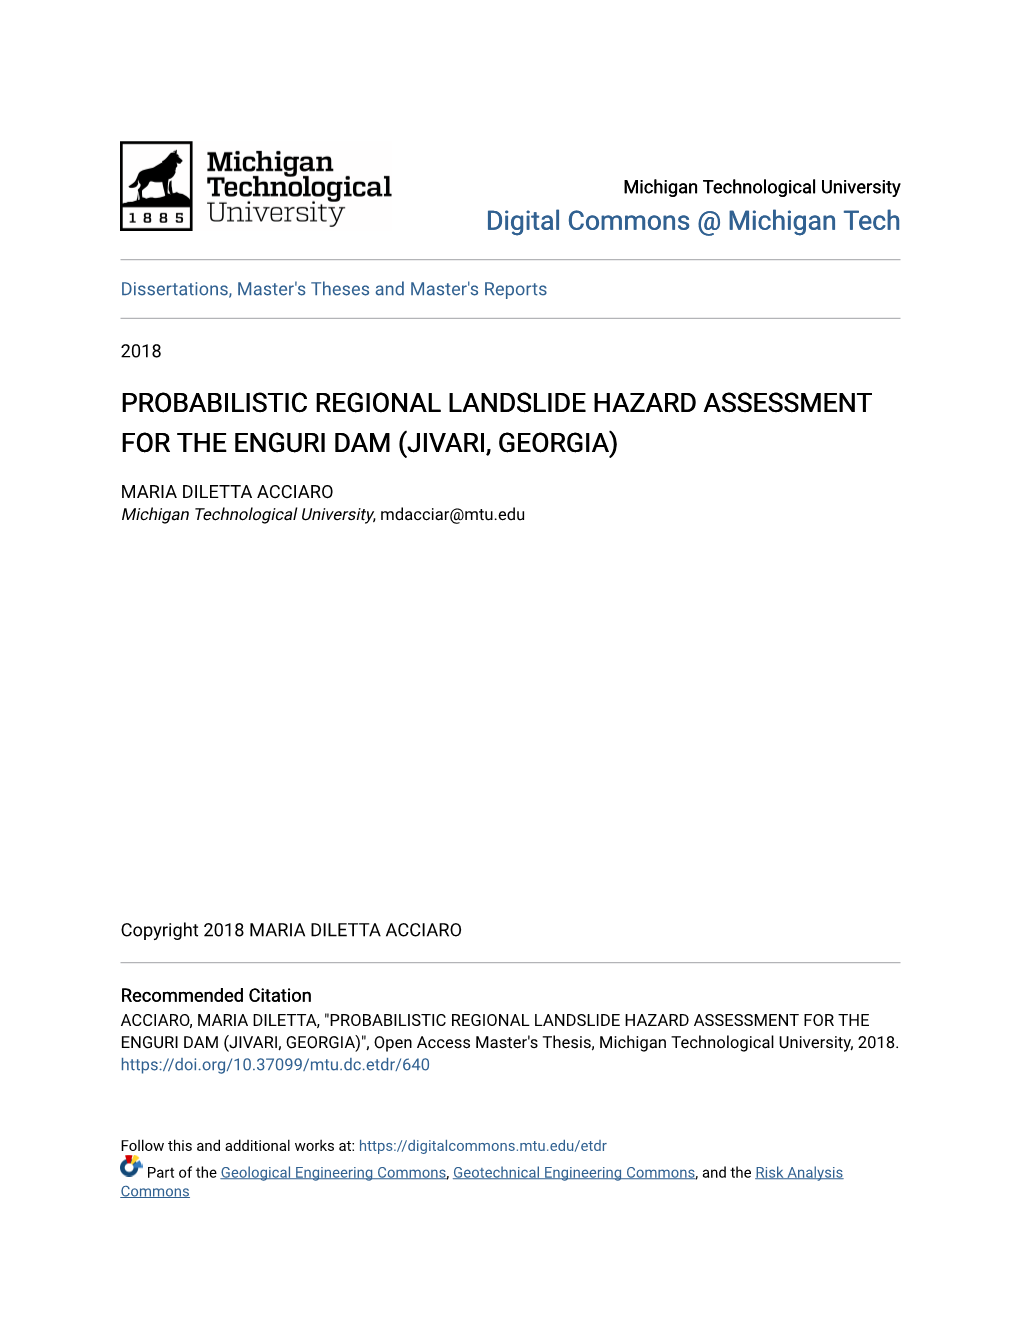 Probabilistic Regional Landslide Hazard Assessment for the Enguri Dam (Jivari, Georgia)